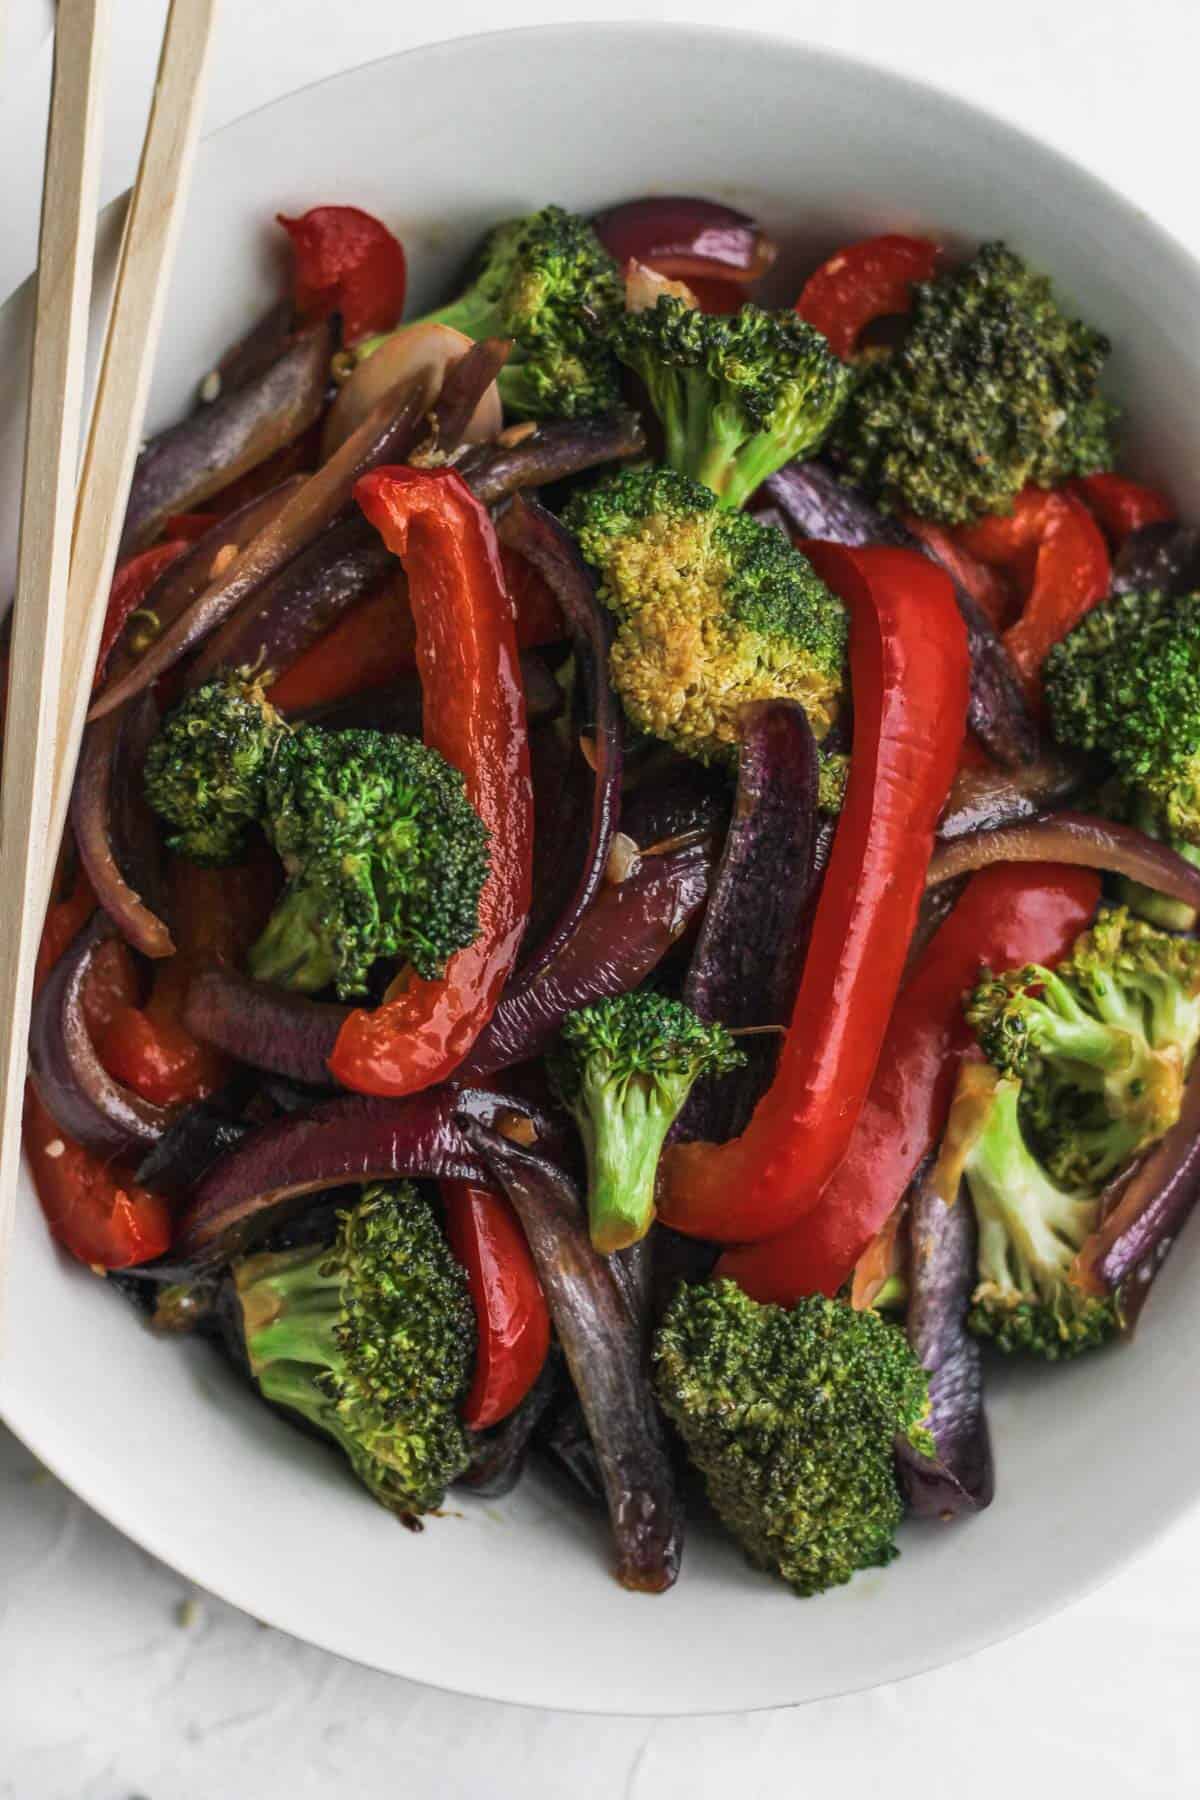 A bowl of stir fried veggies.